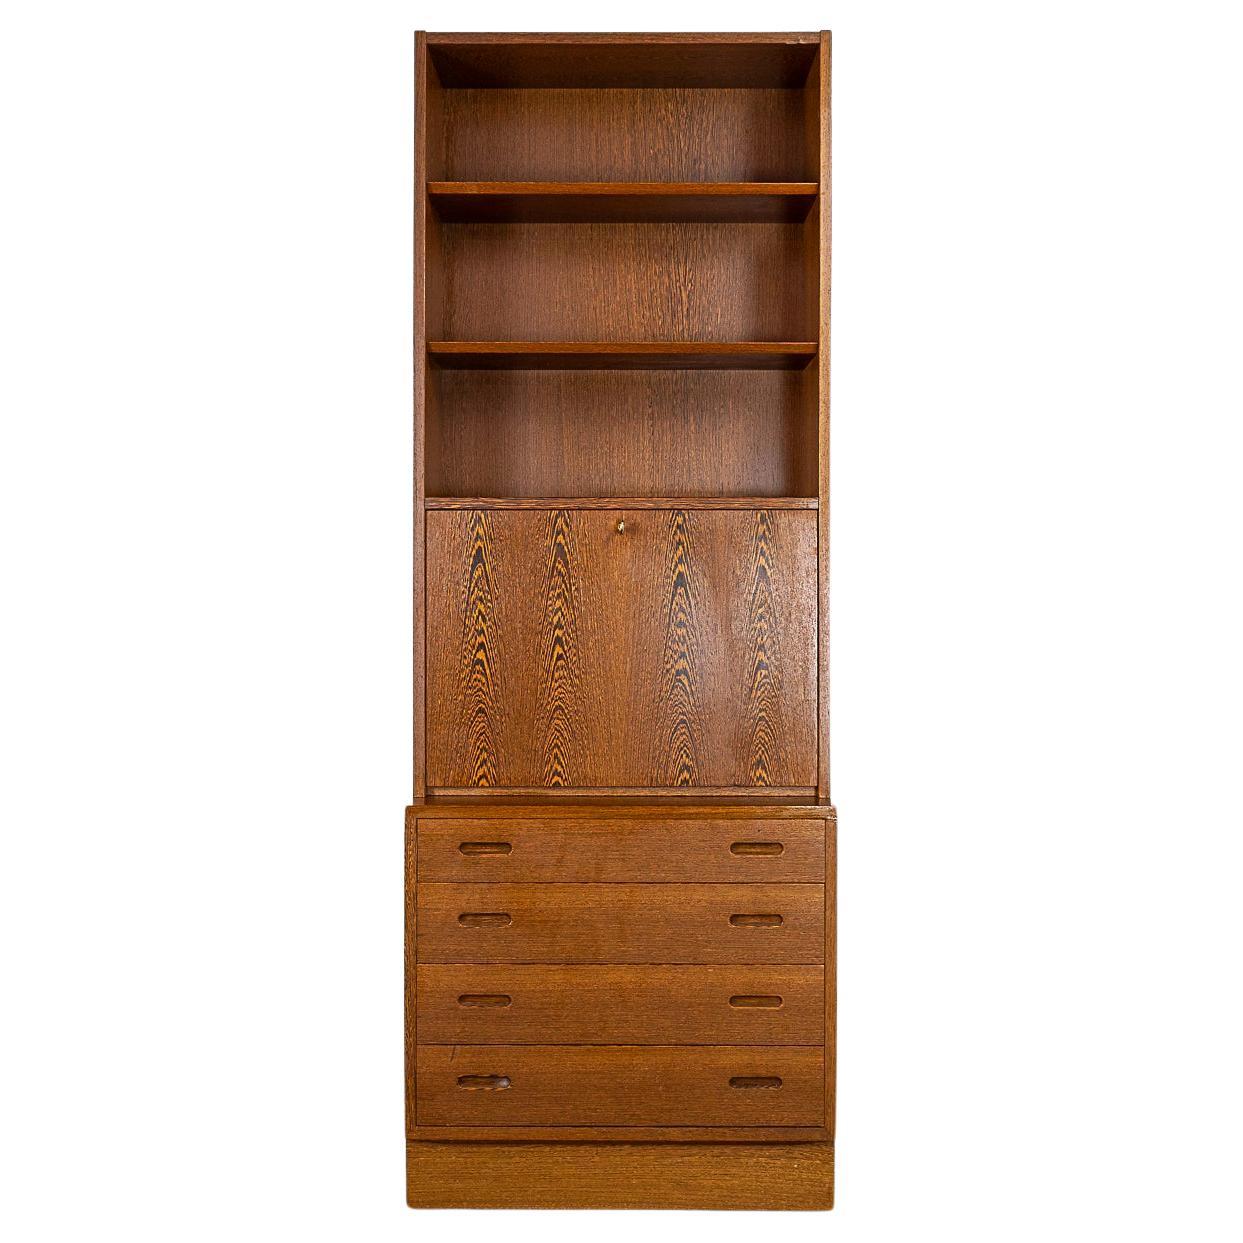 Wenge Wood Bookcase/Secretary by Hundevad For Sale